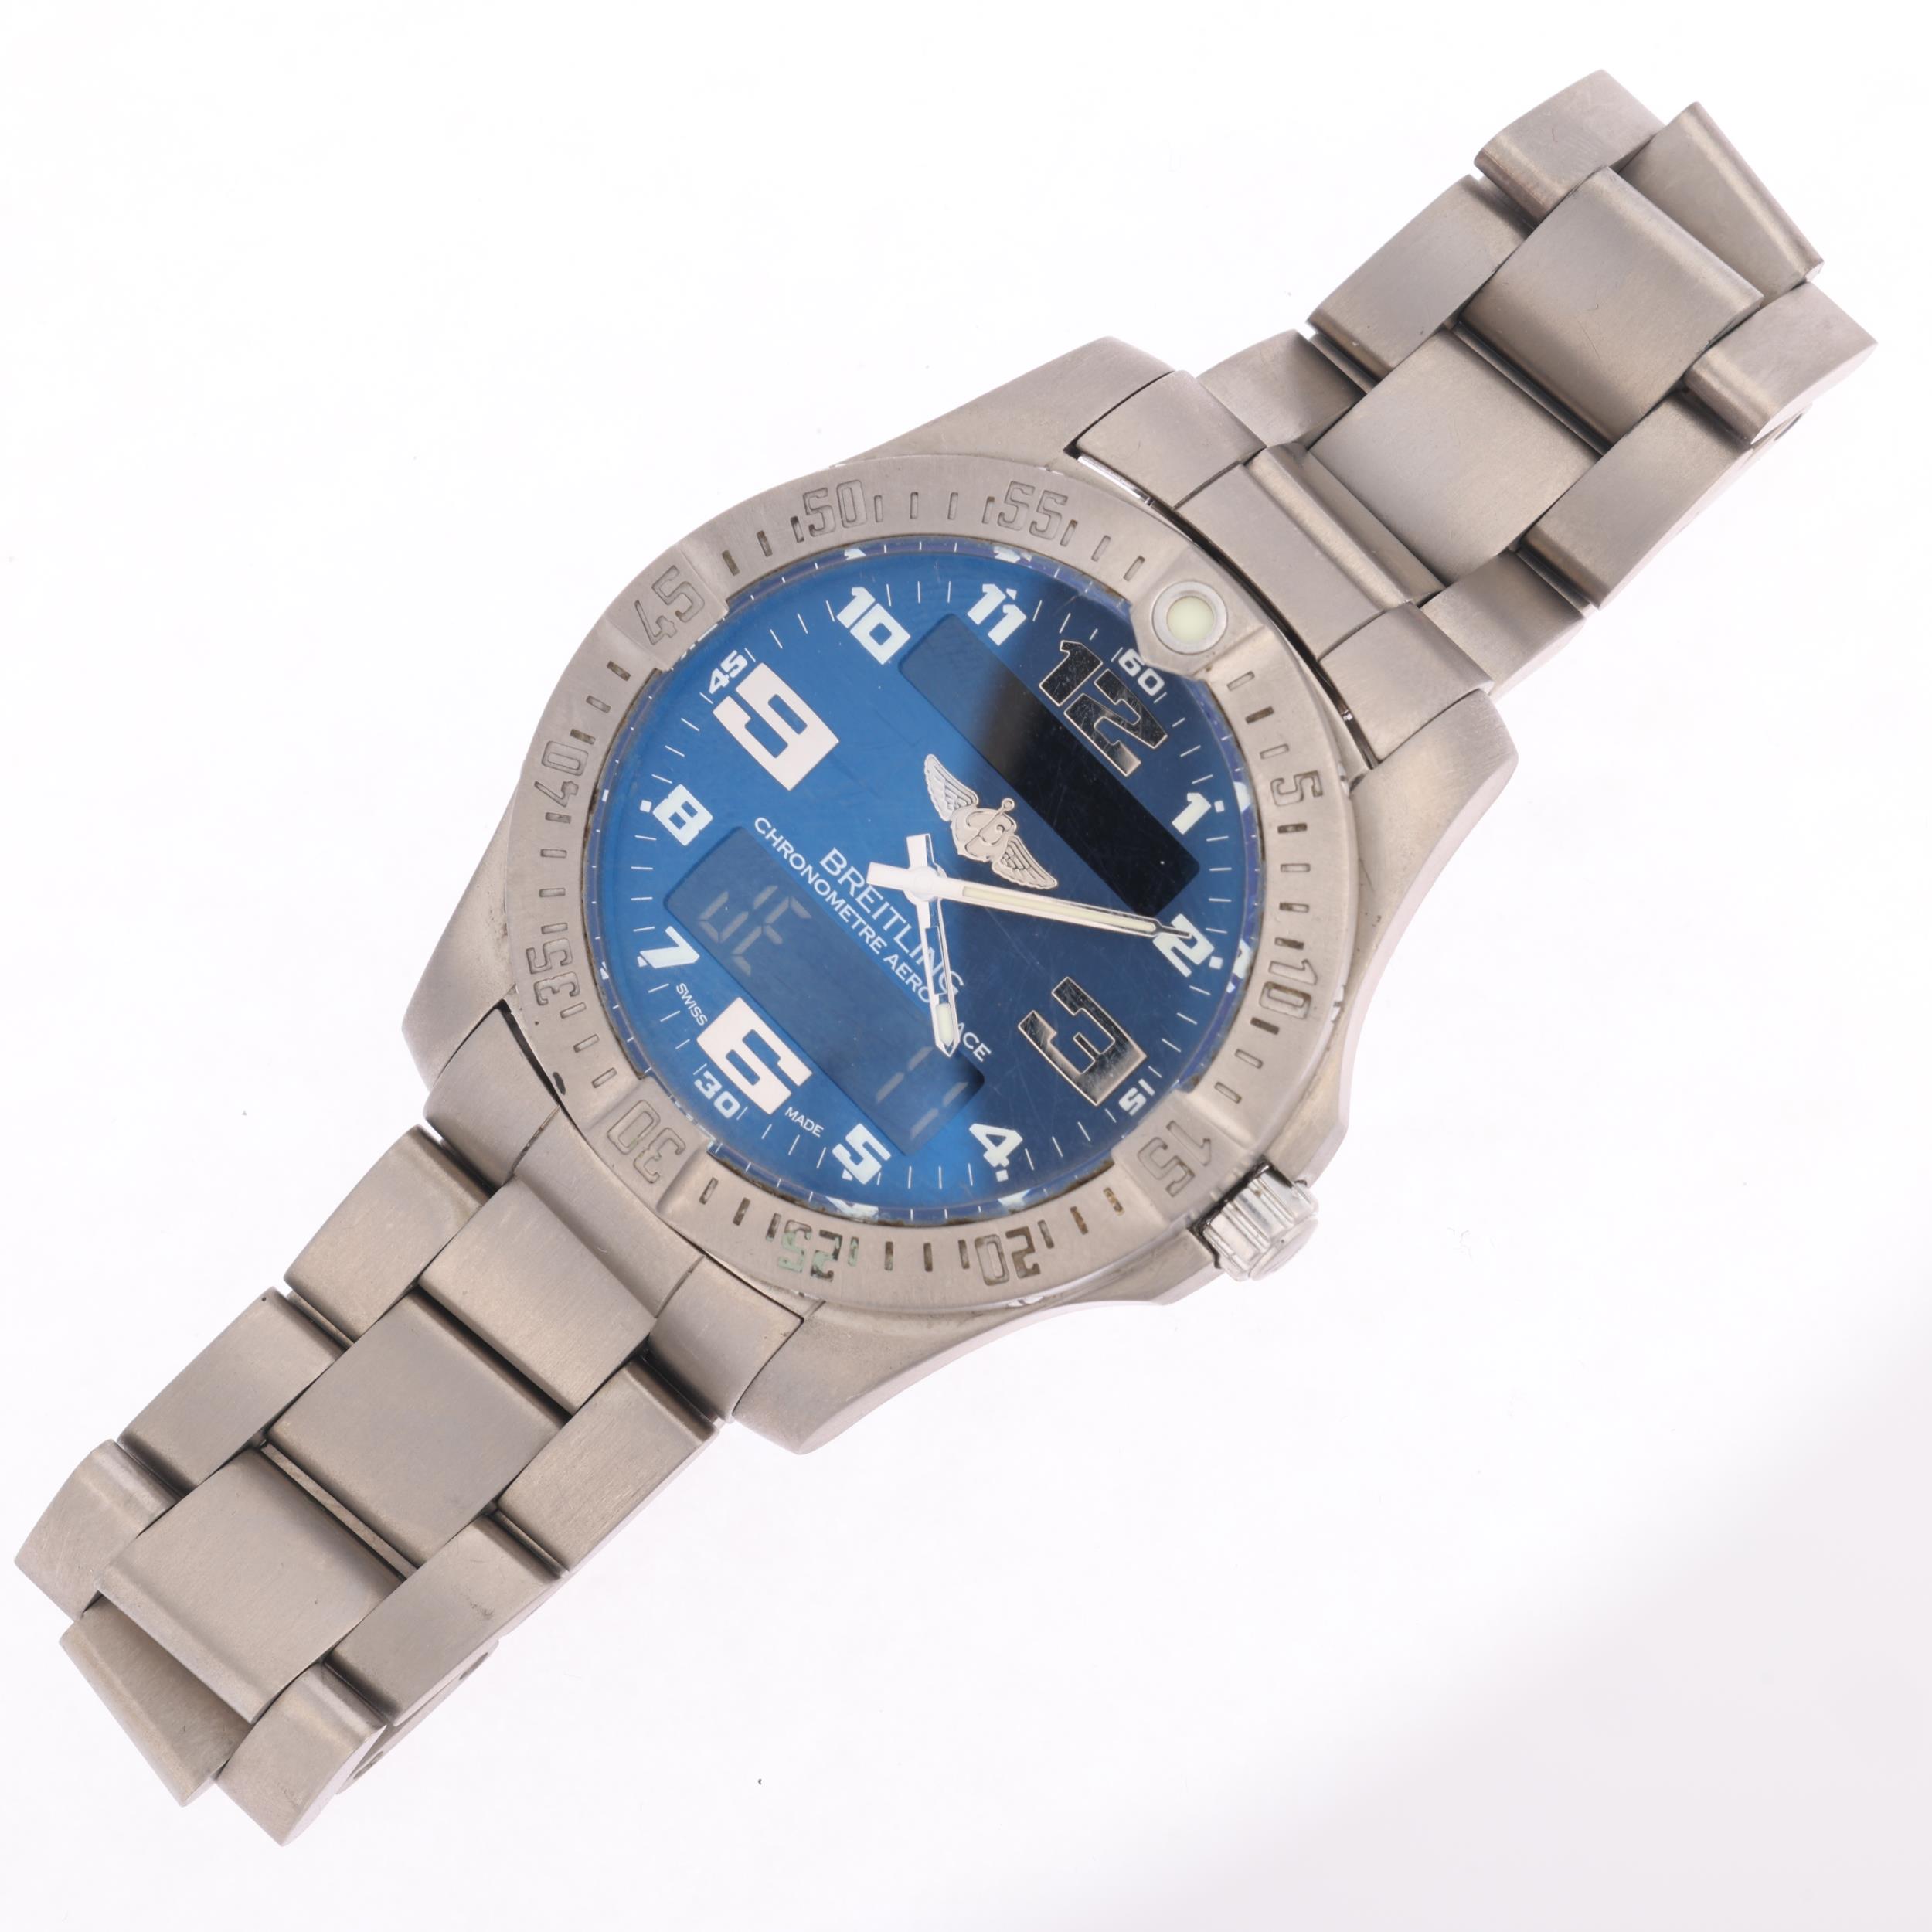 BREITLING - a titanium Aerospace EVO electronic digital wristwatch, ref. E79363, blue dial with - Image 2 of 5